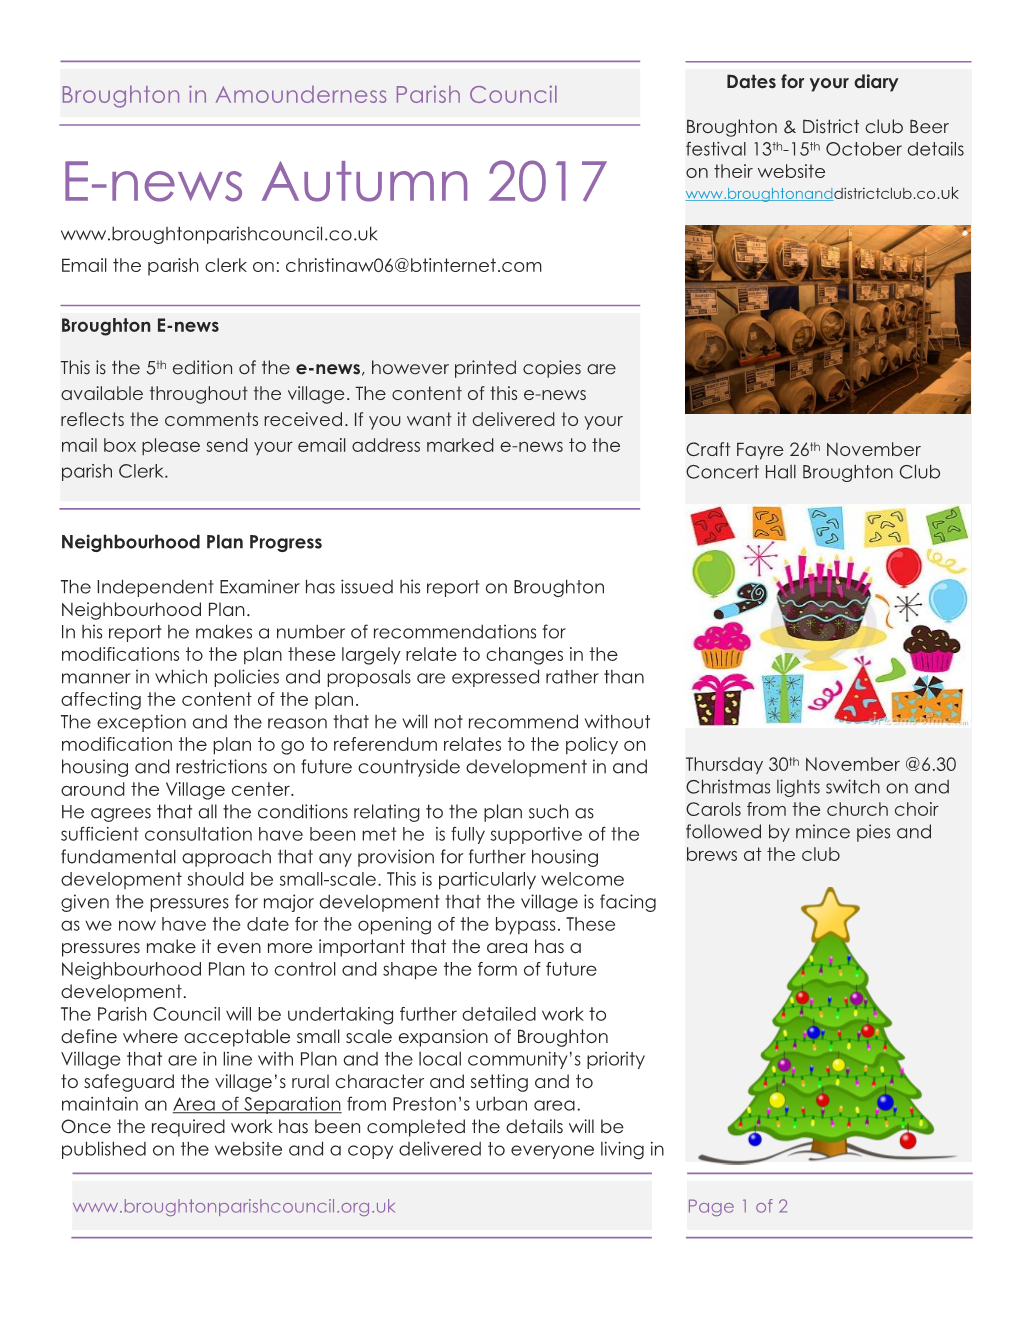 E-News Autumn 2017 Email the Parish Clerk On: Christinaw06@Btinternet.Com